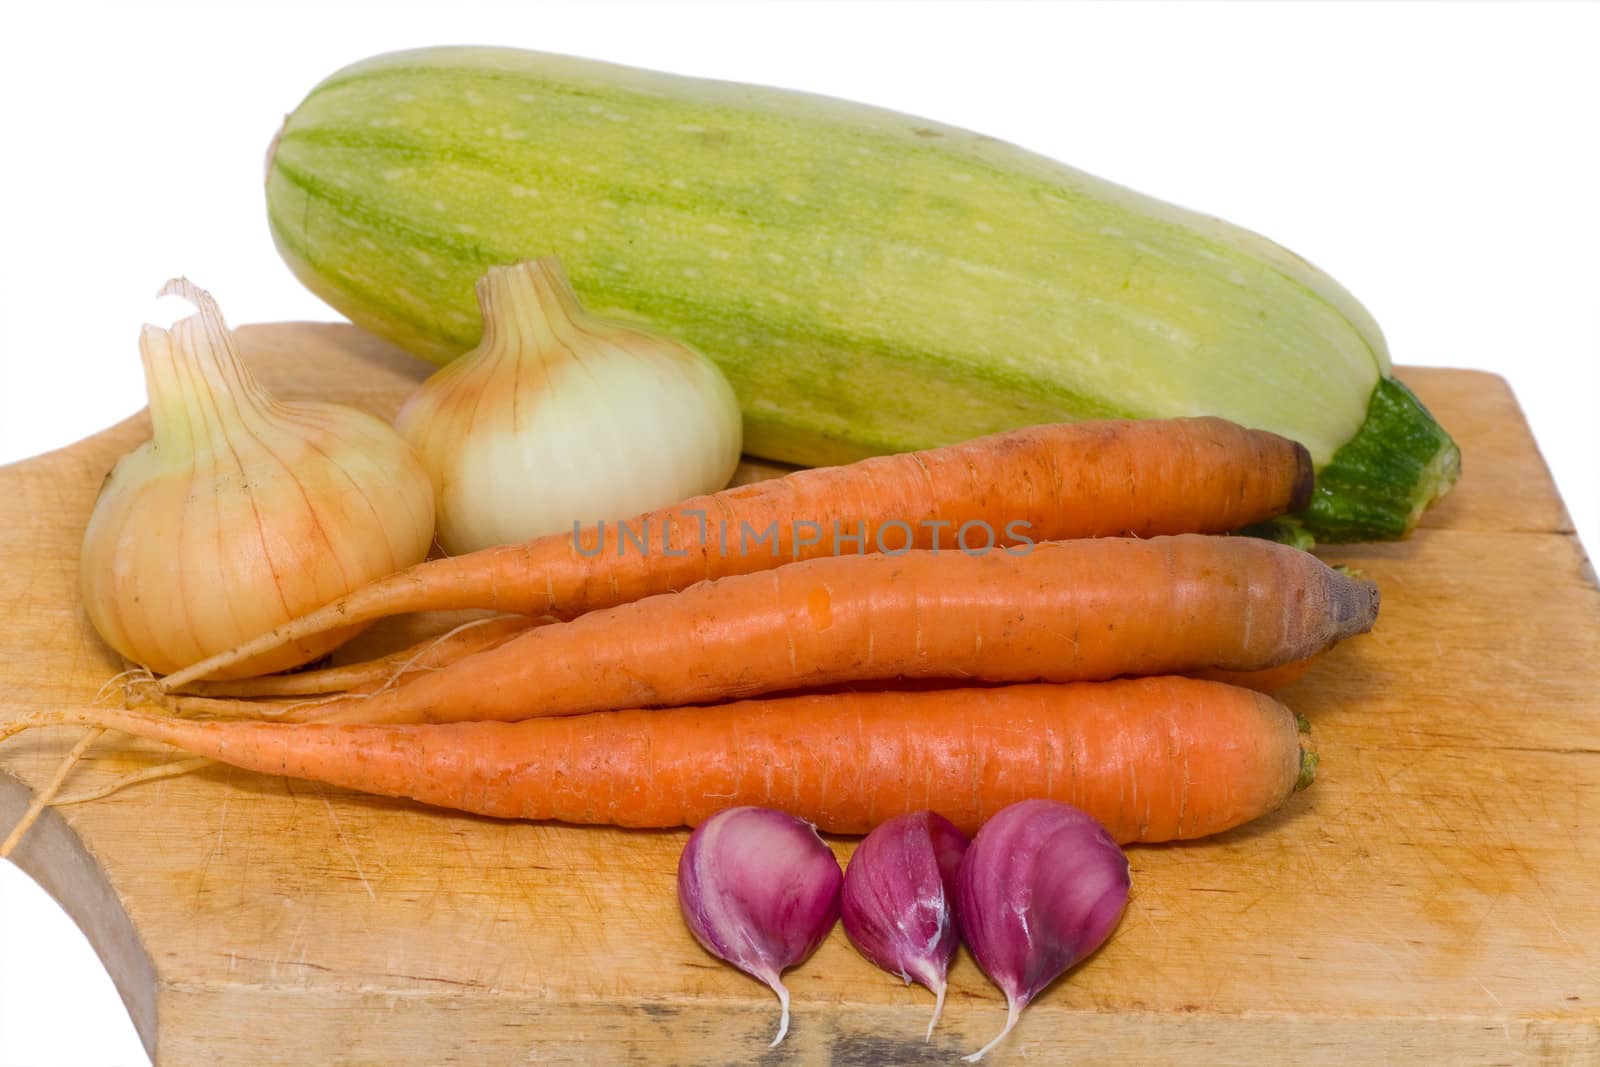 fresh vegetables on wooden table after market 